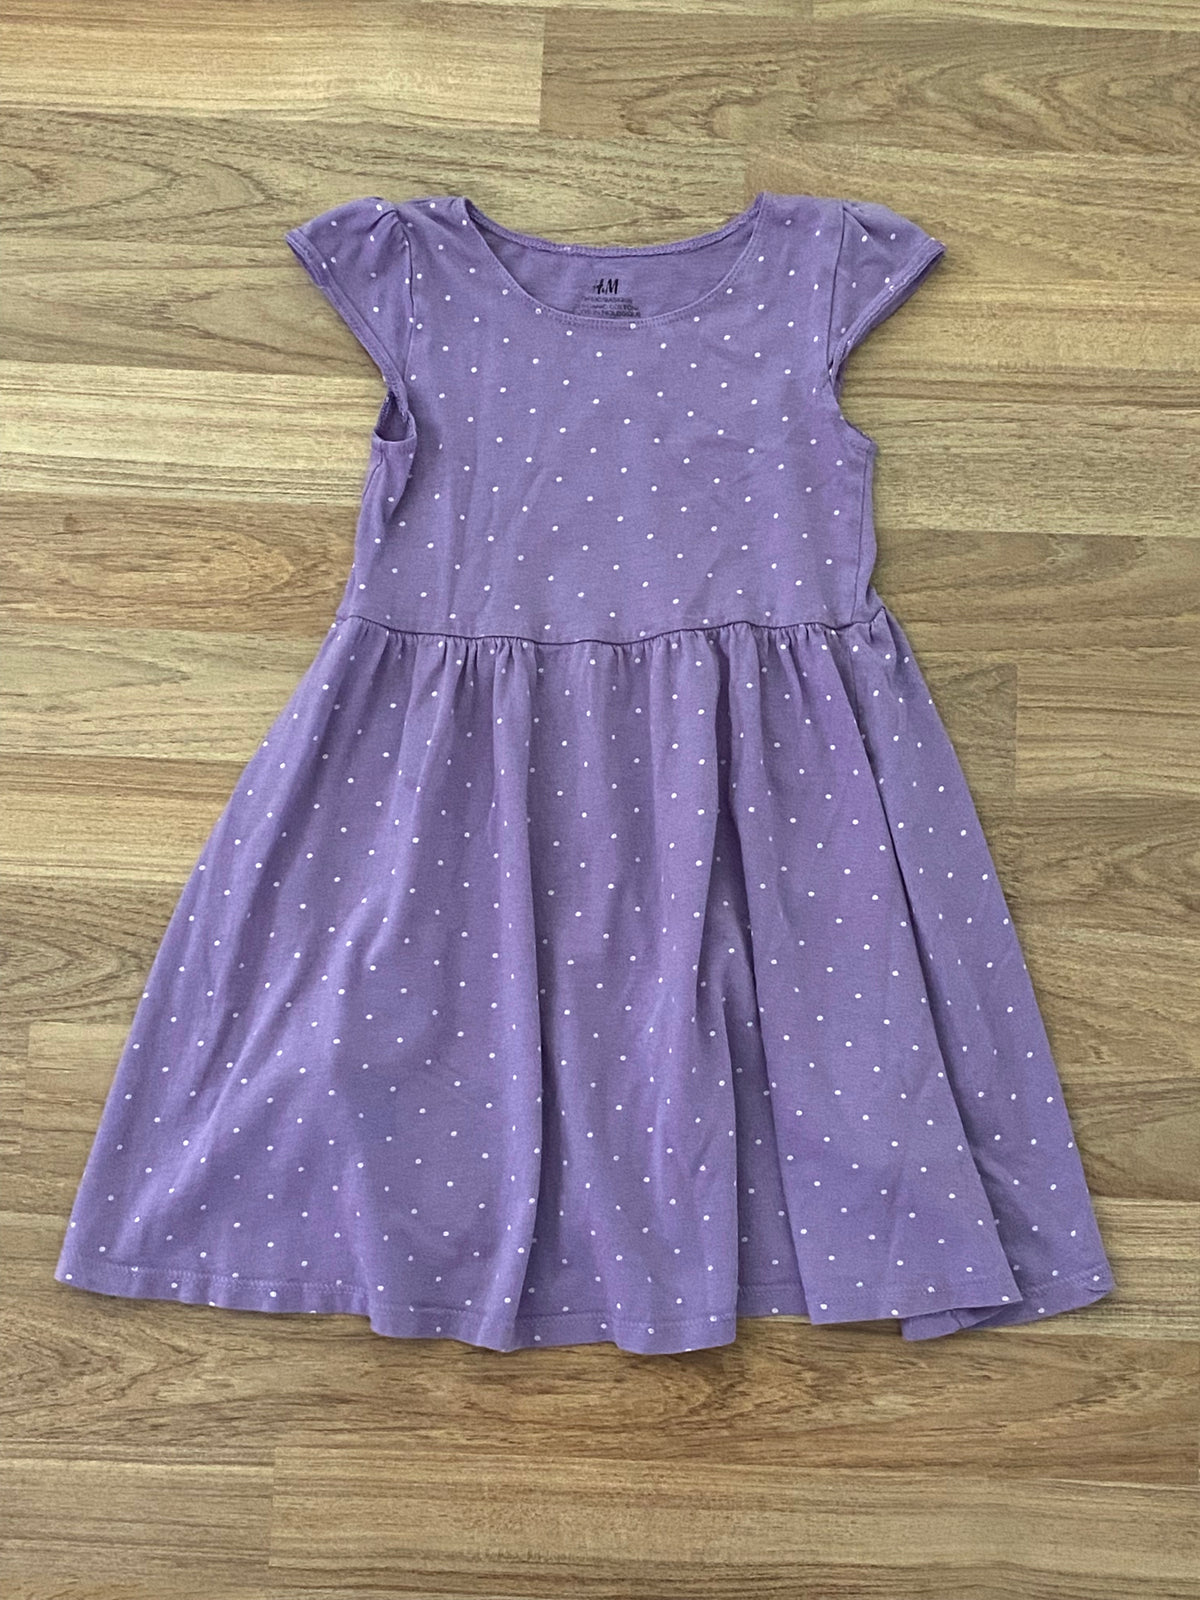 Dress (Girls Size 4-5)